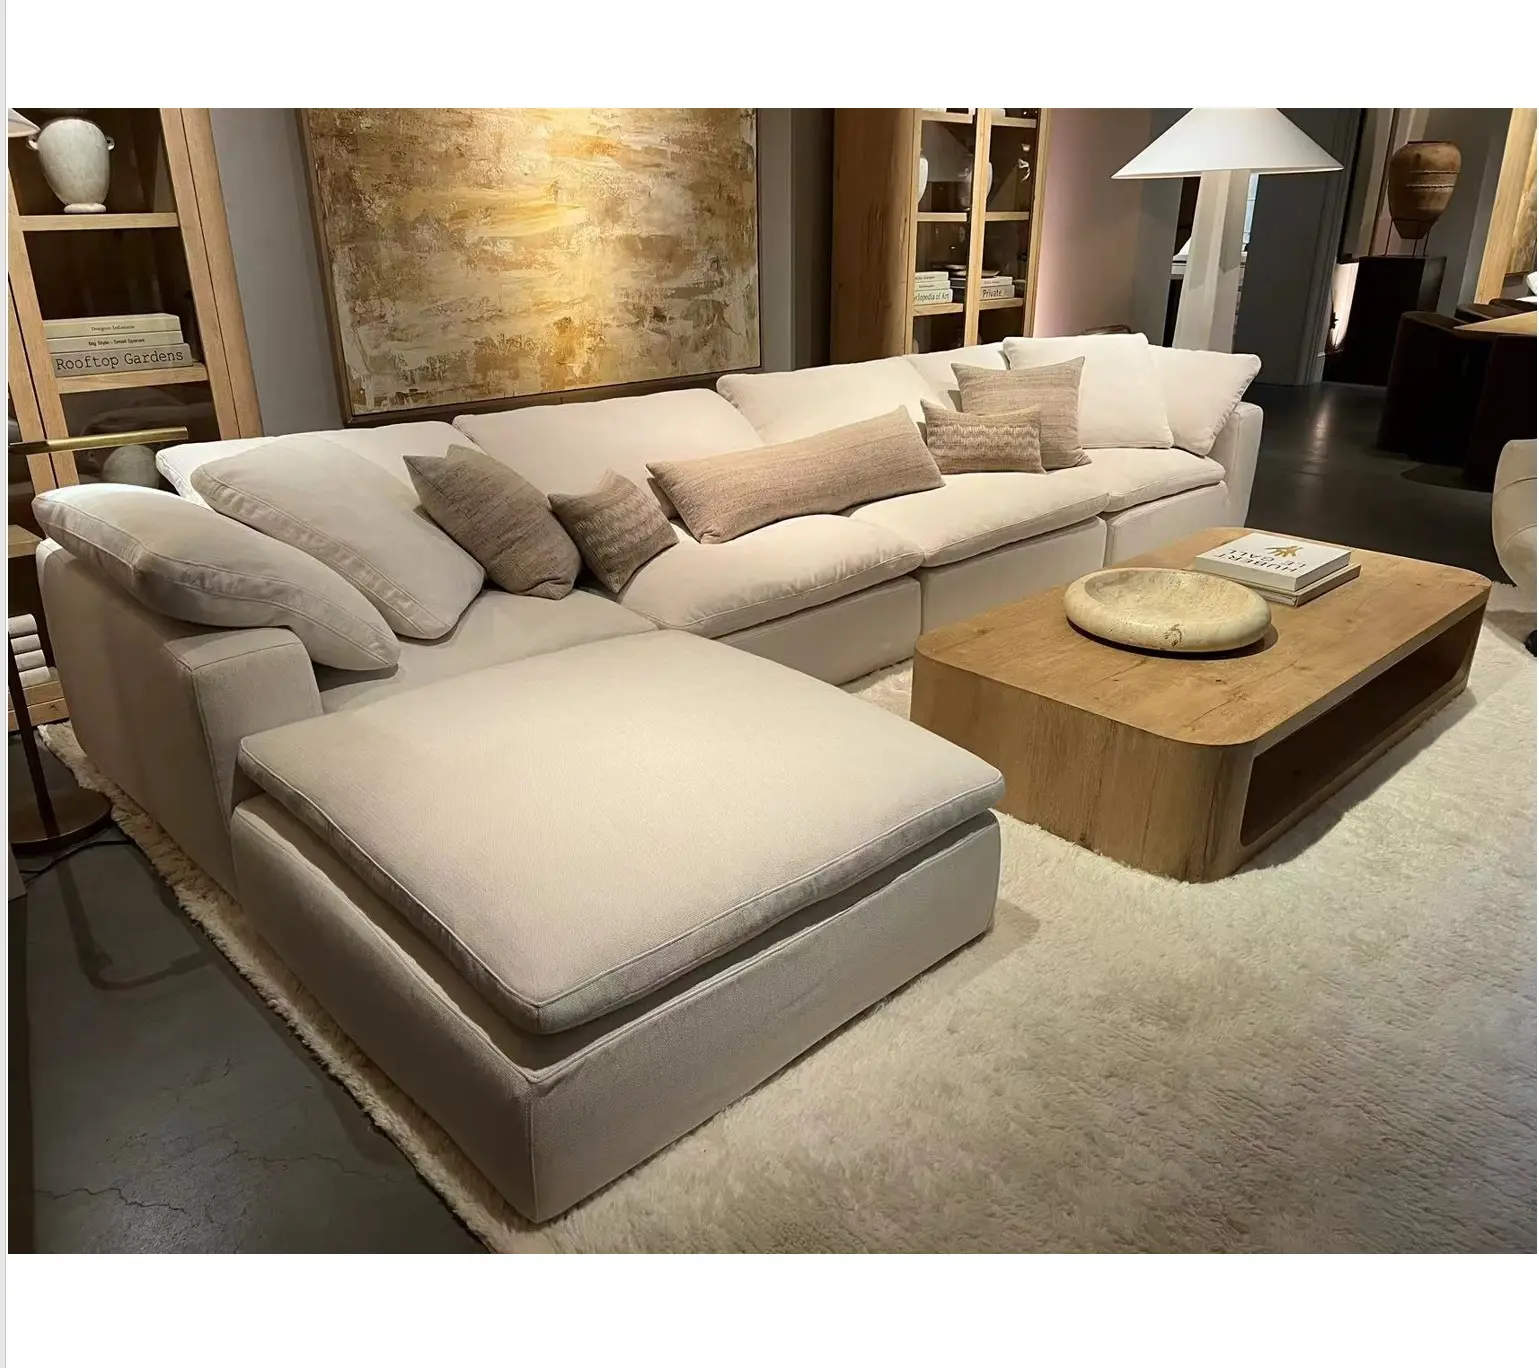 Conjunto de sofás modulares para sala de estar, mobiliario Modular de brazo derecho seccional